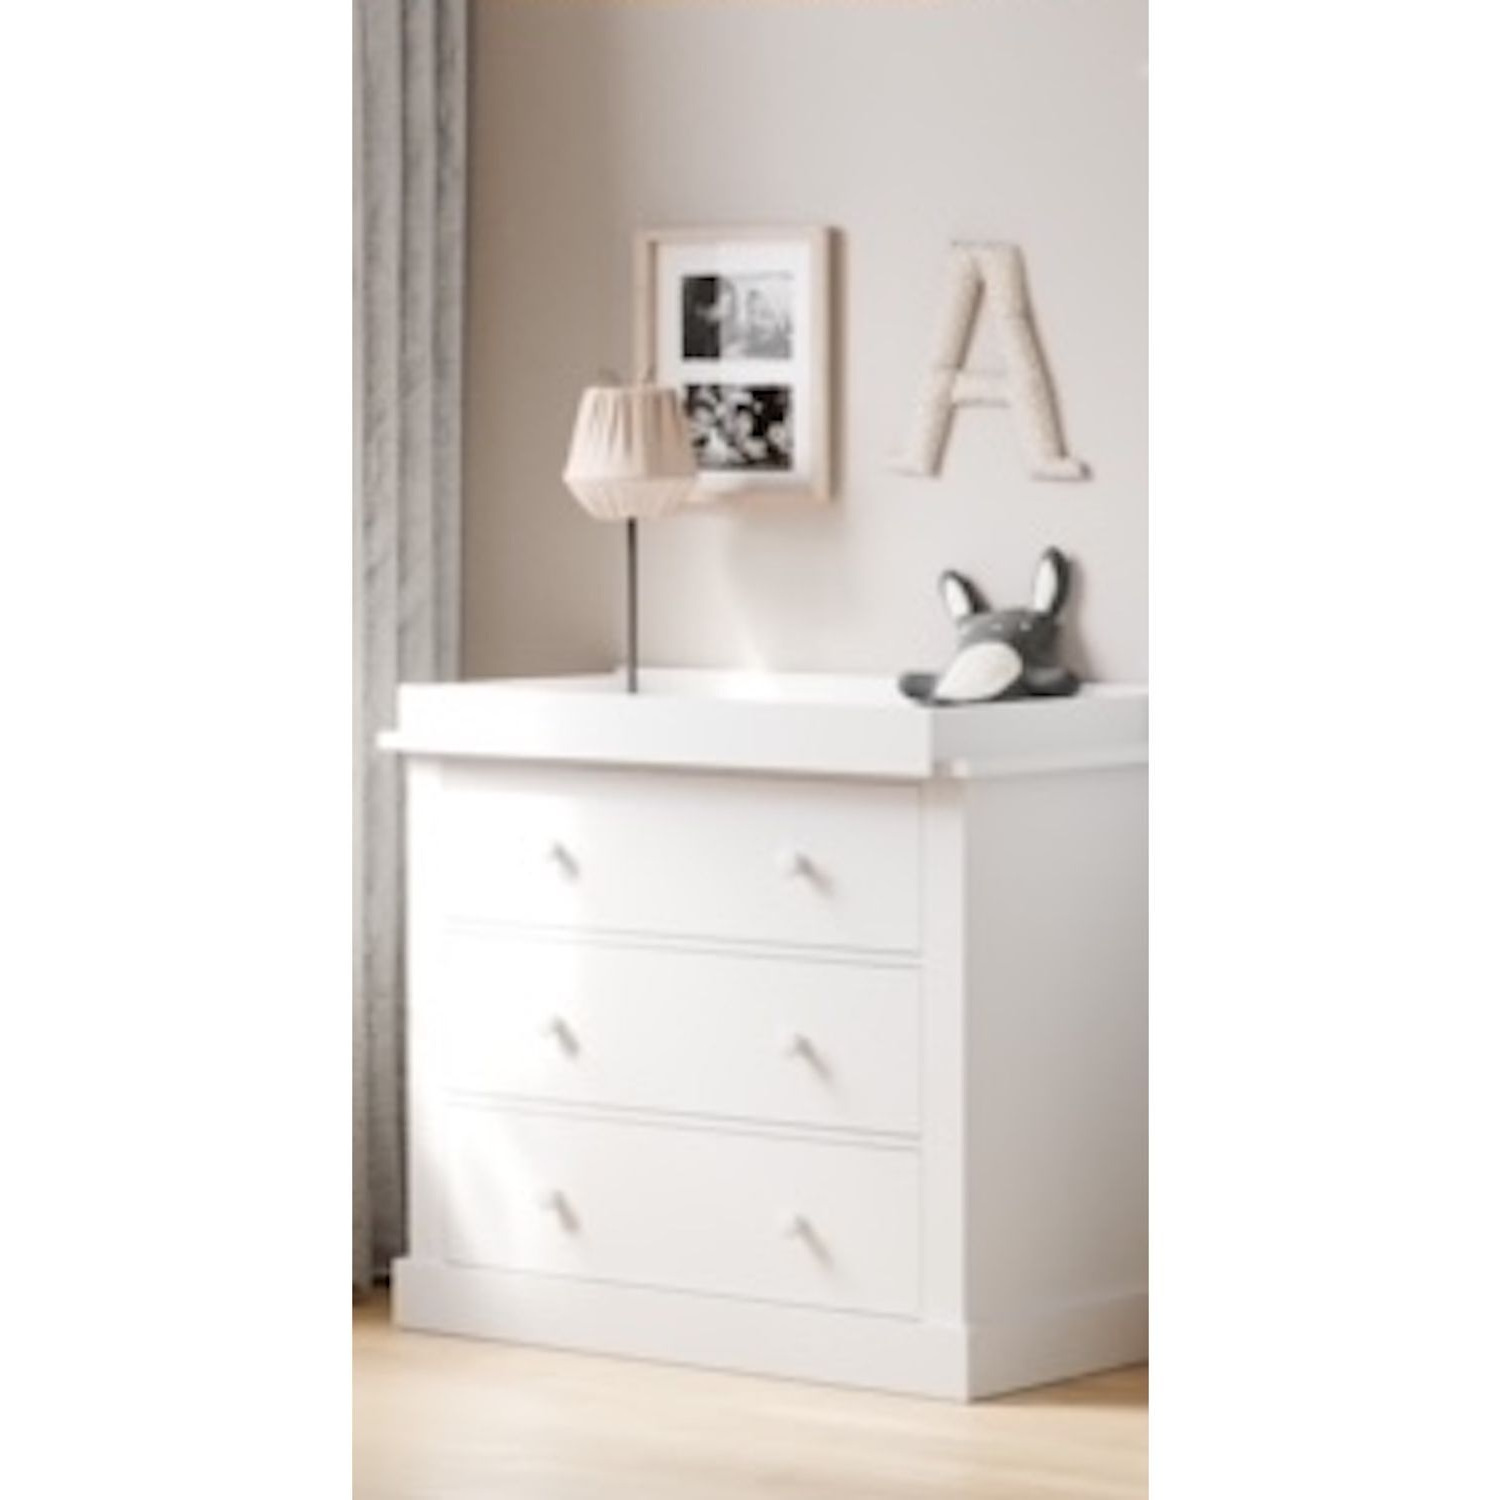 Little Acorns Langdon Changing Table Dresser, White - image 1